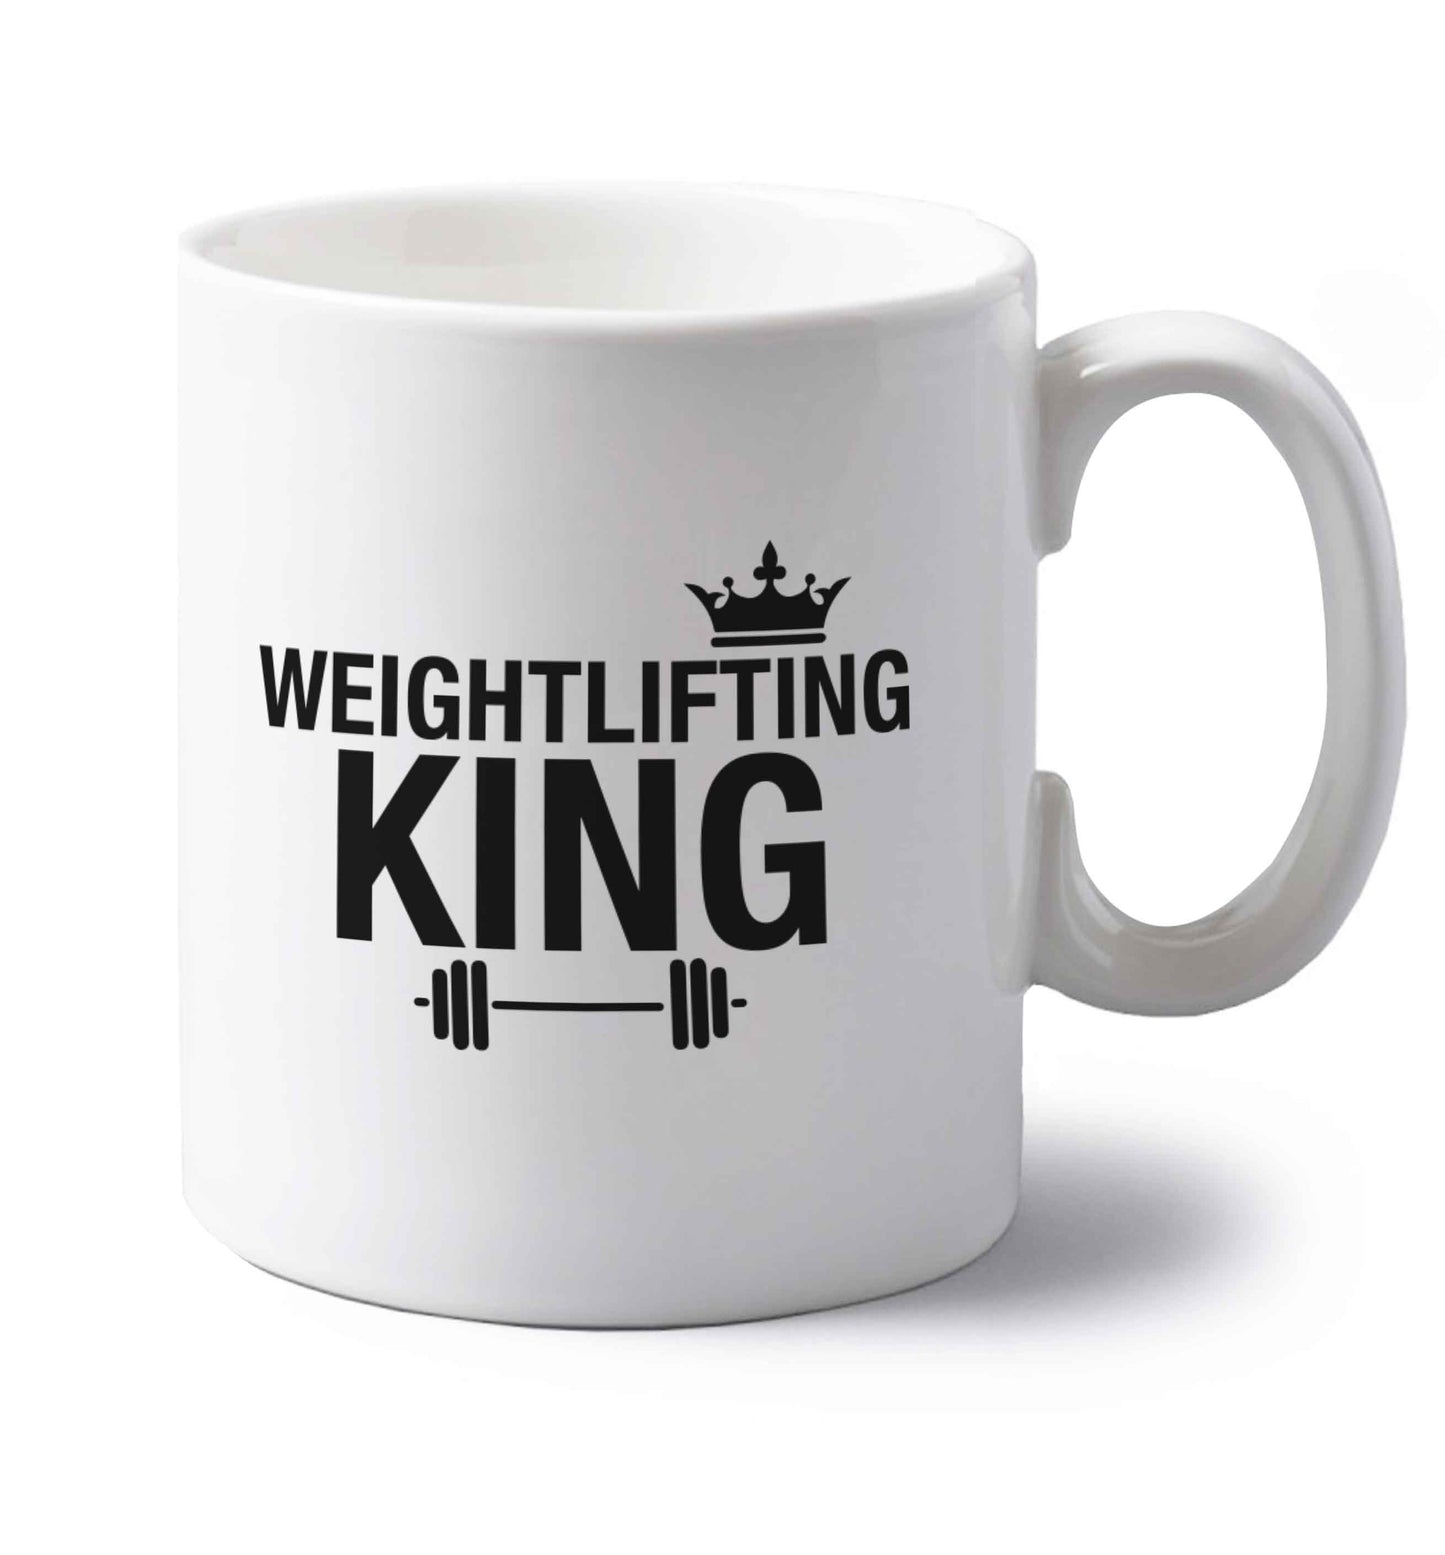 Weightlifting king left handed white ceramic mug 